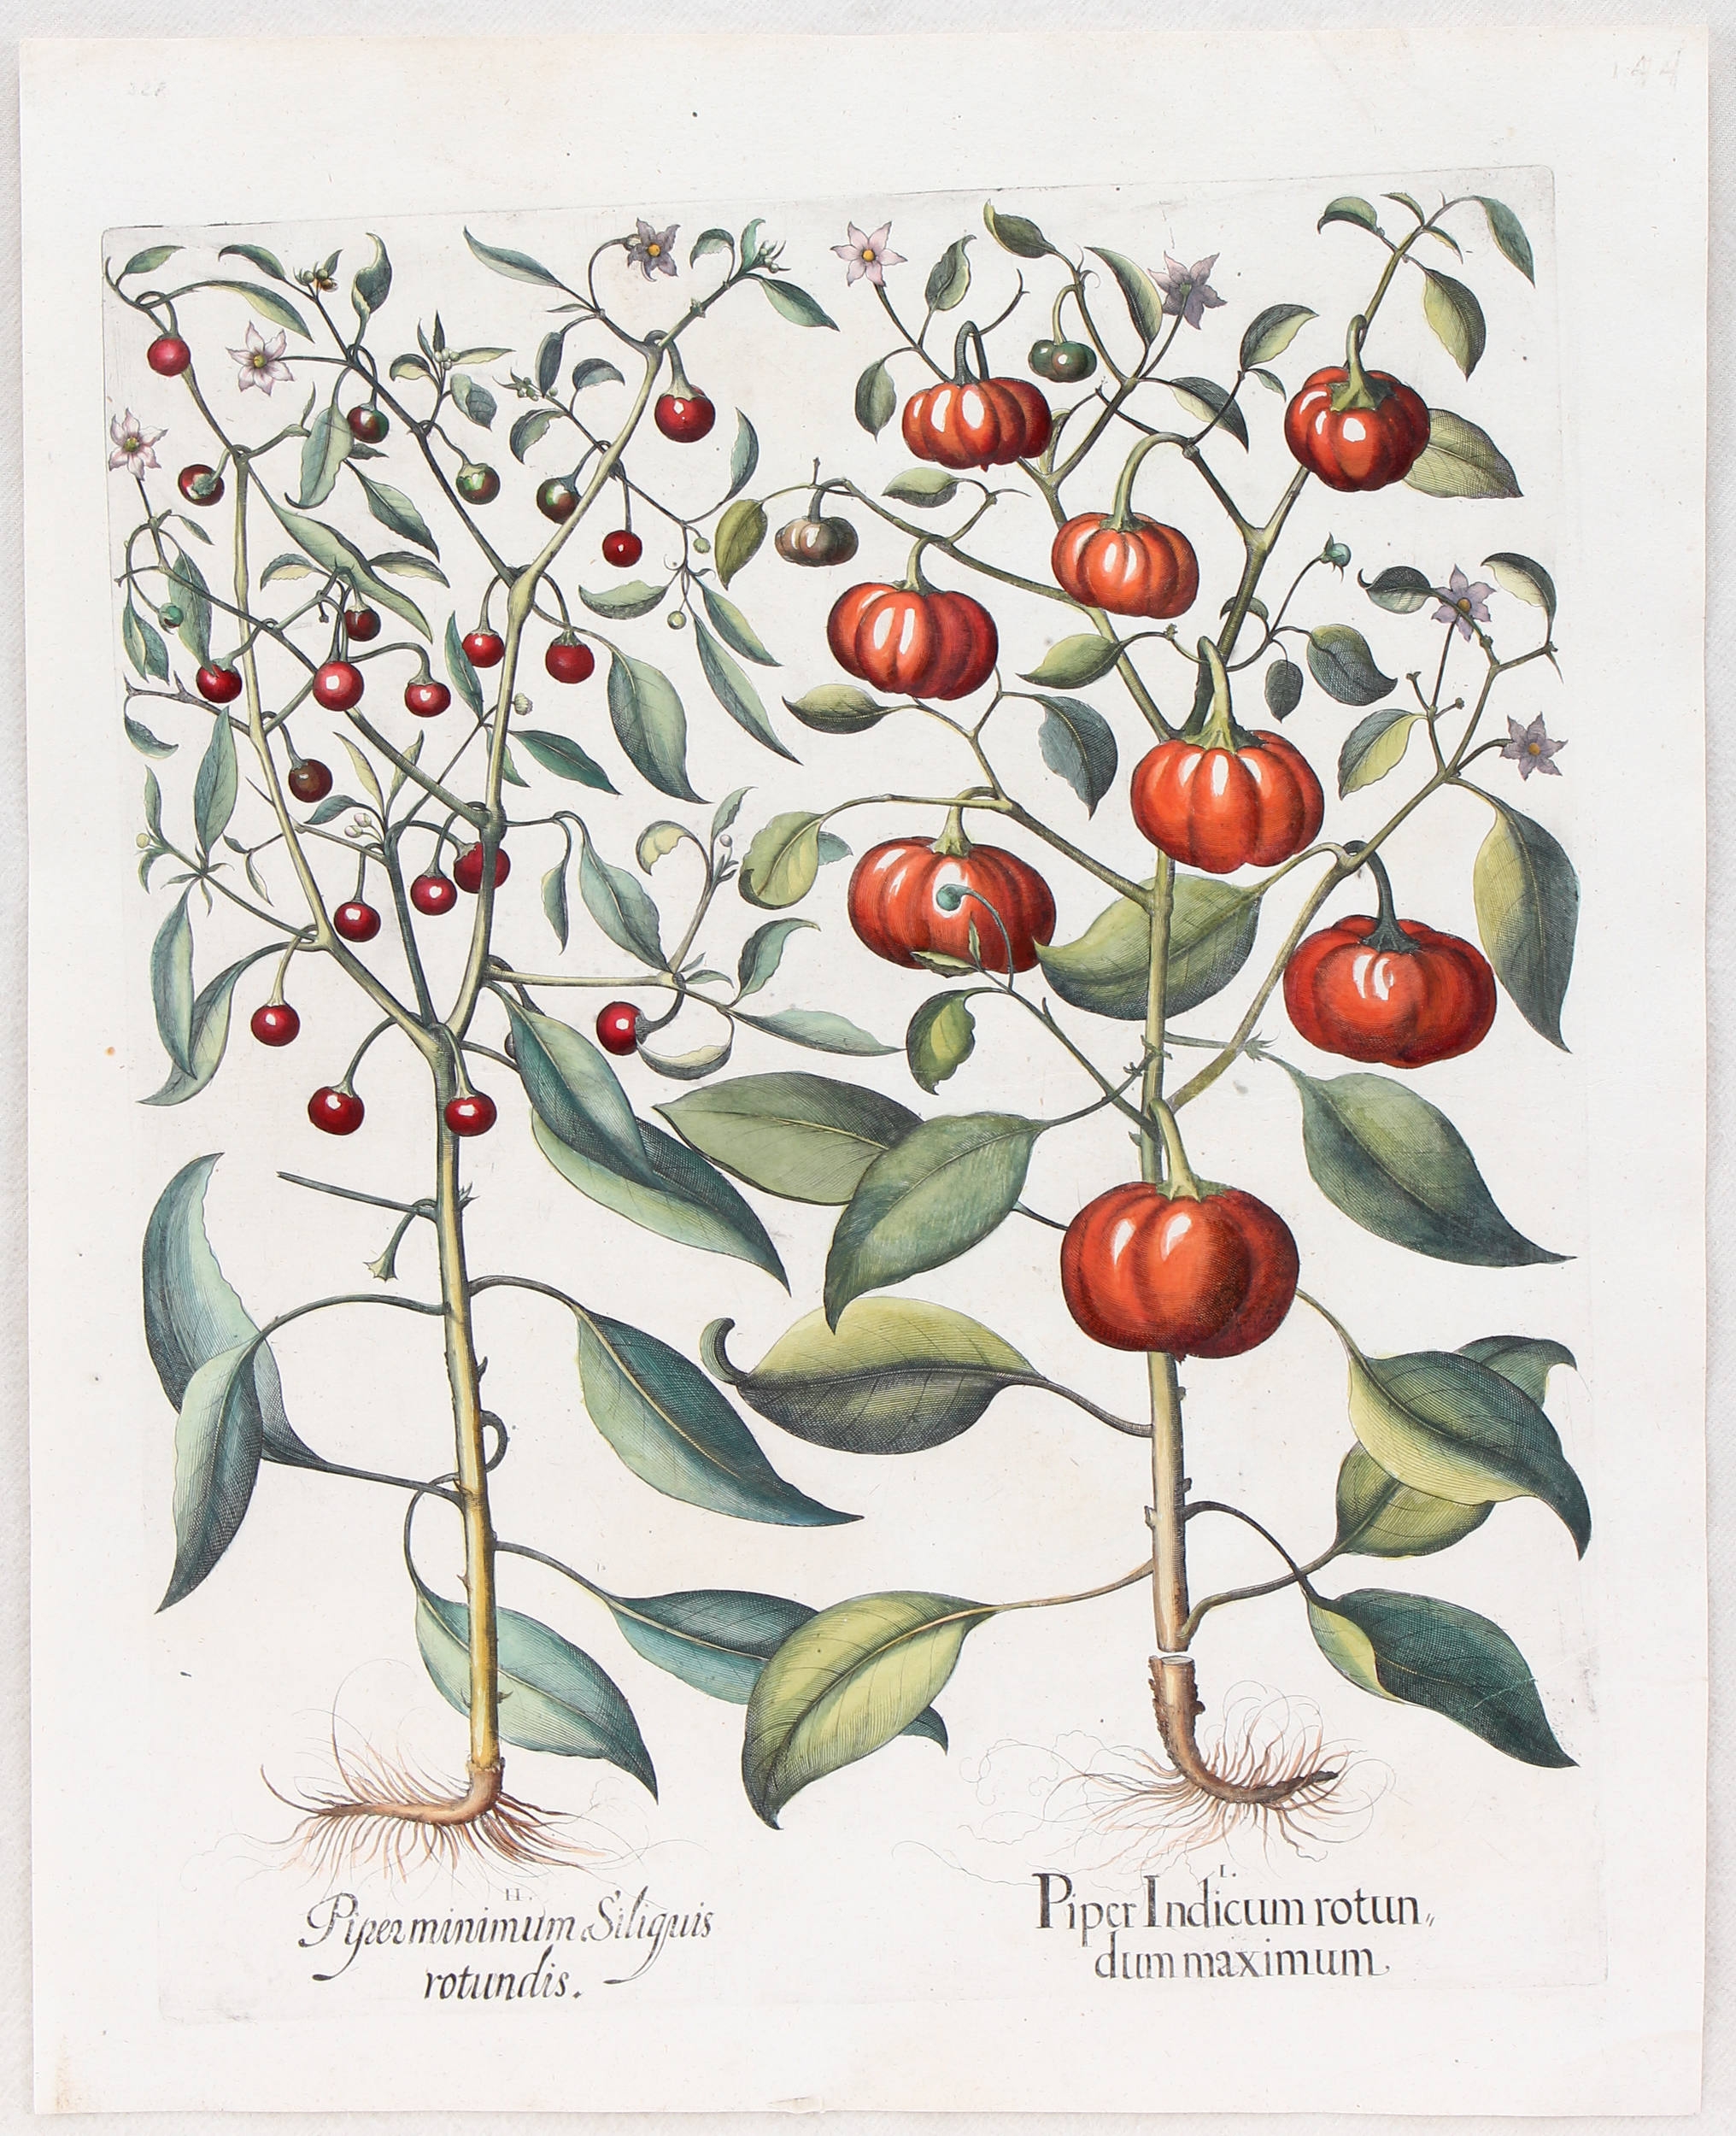 Piper Indicum rotundum maximum (&) minimum Siliguis rotundis (Süße und Kirschen-Paprika) by Basilius Besler